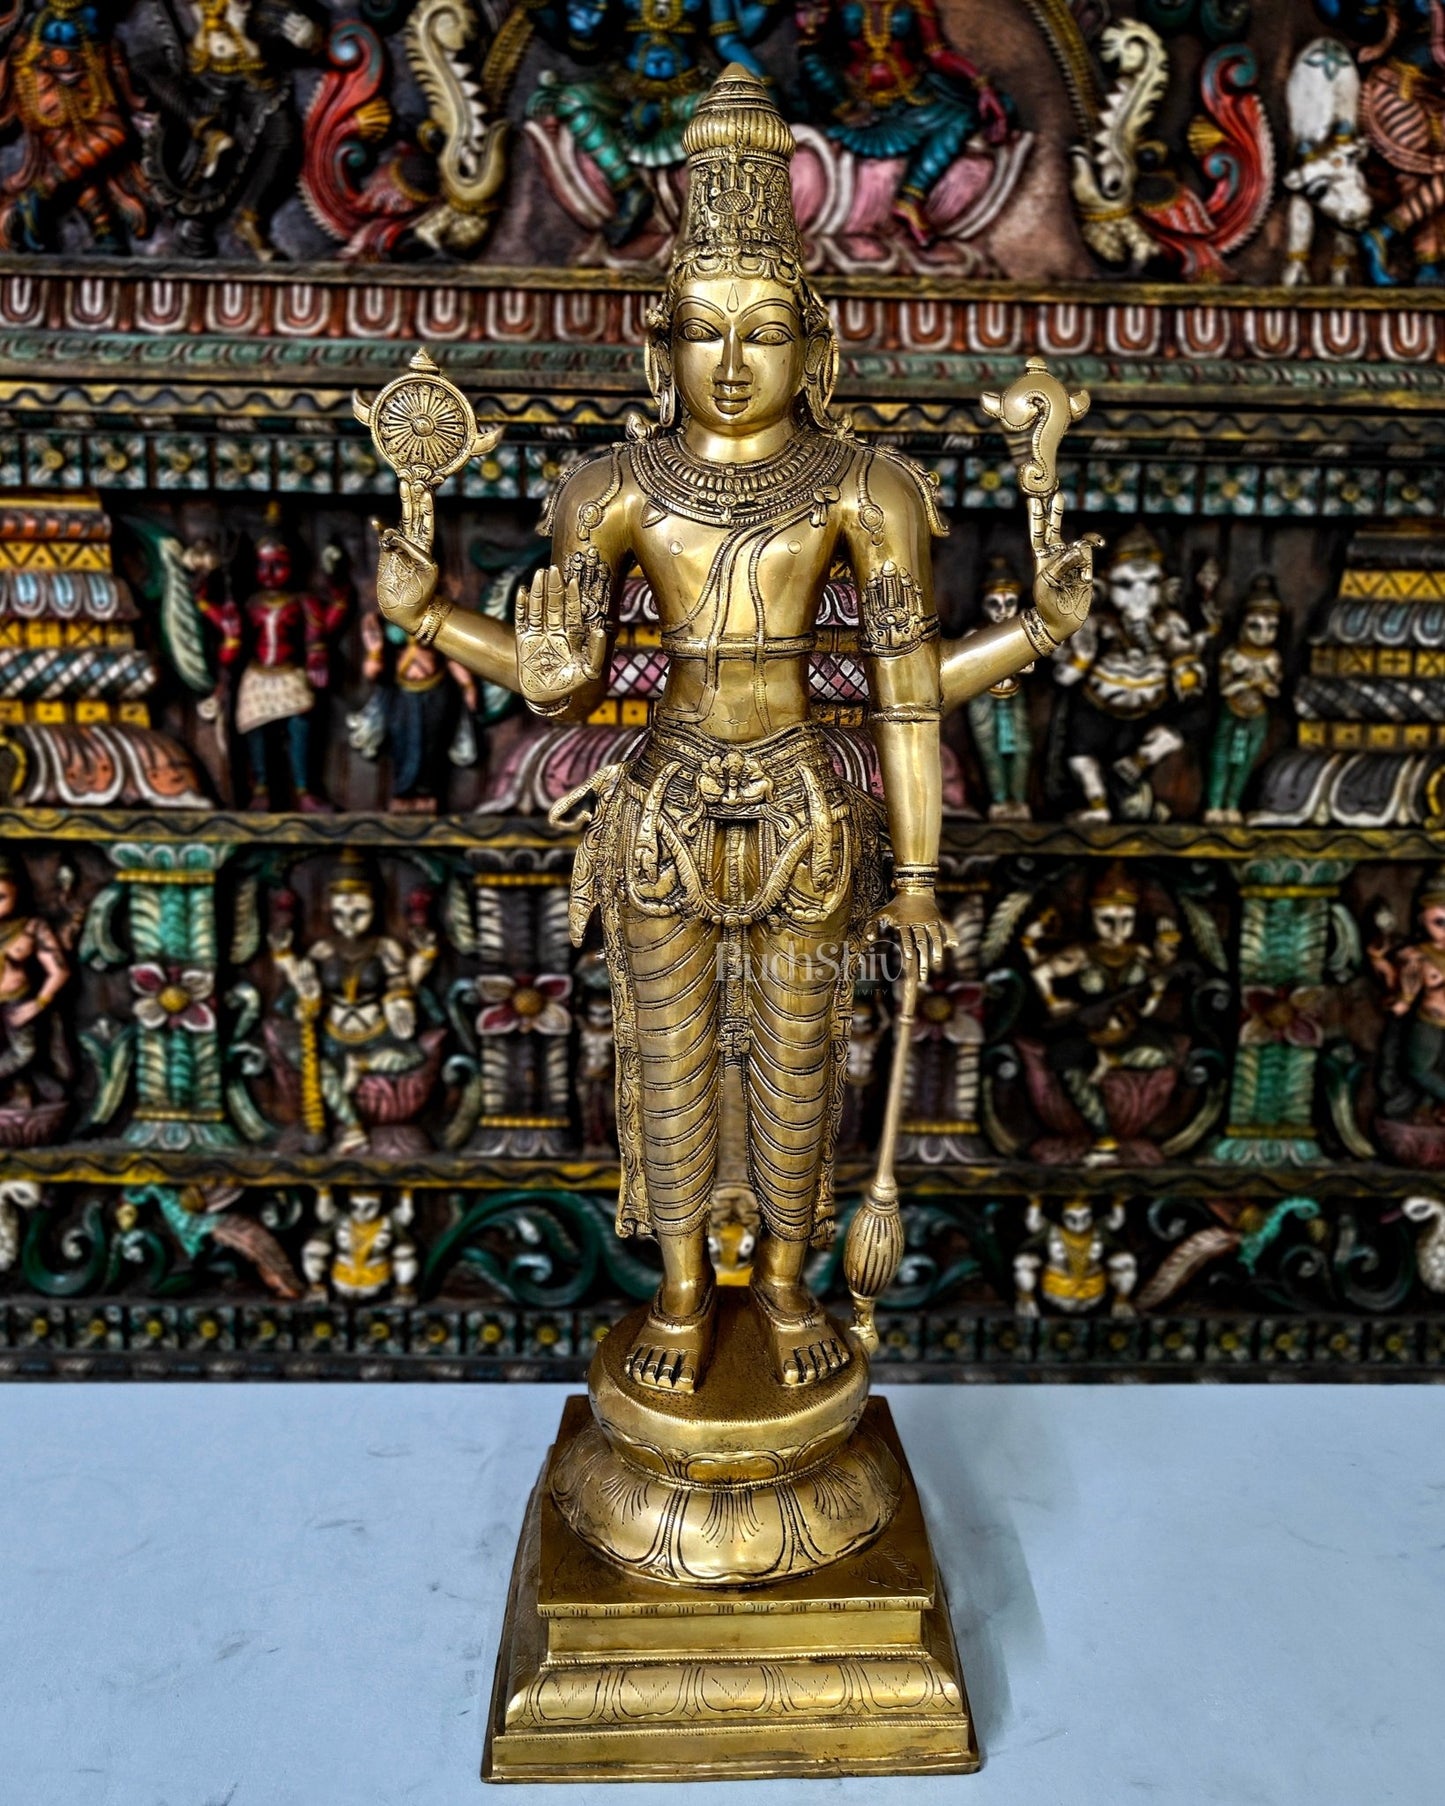 Superfine Brass Lord Vishnu Standing Sculpture - 37 inch - Budhshiv.com